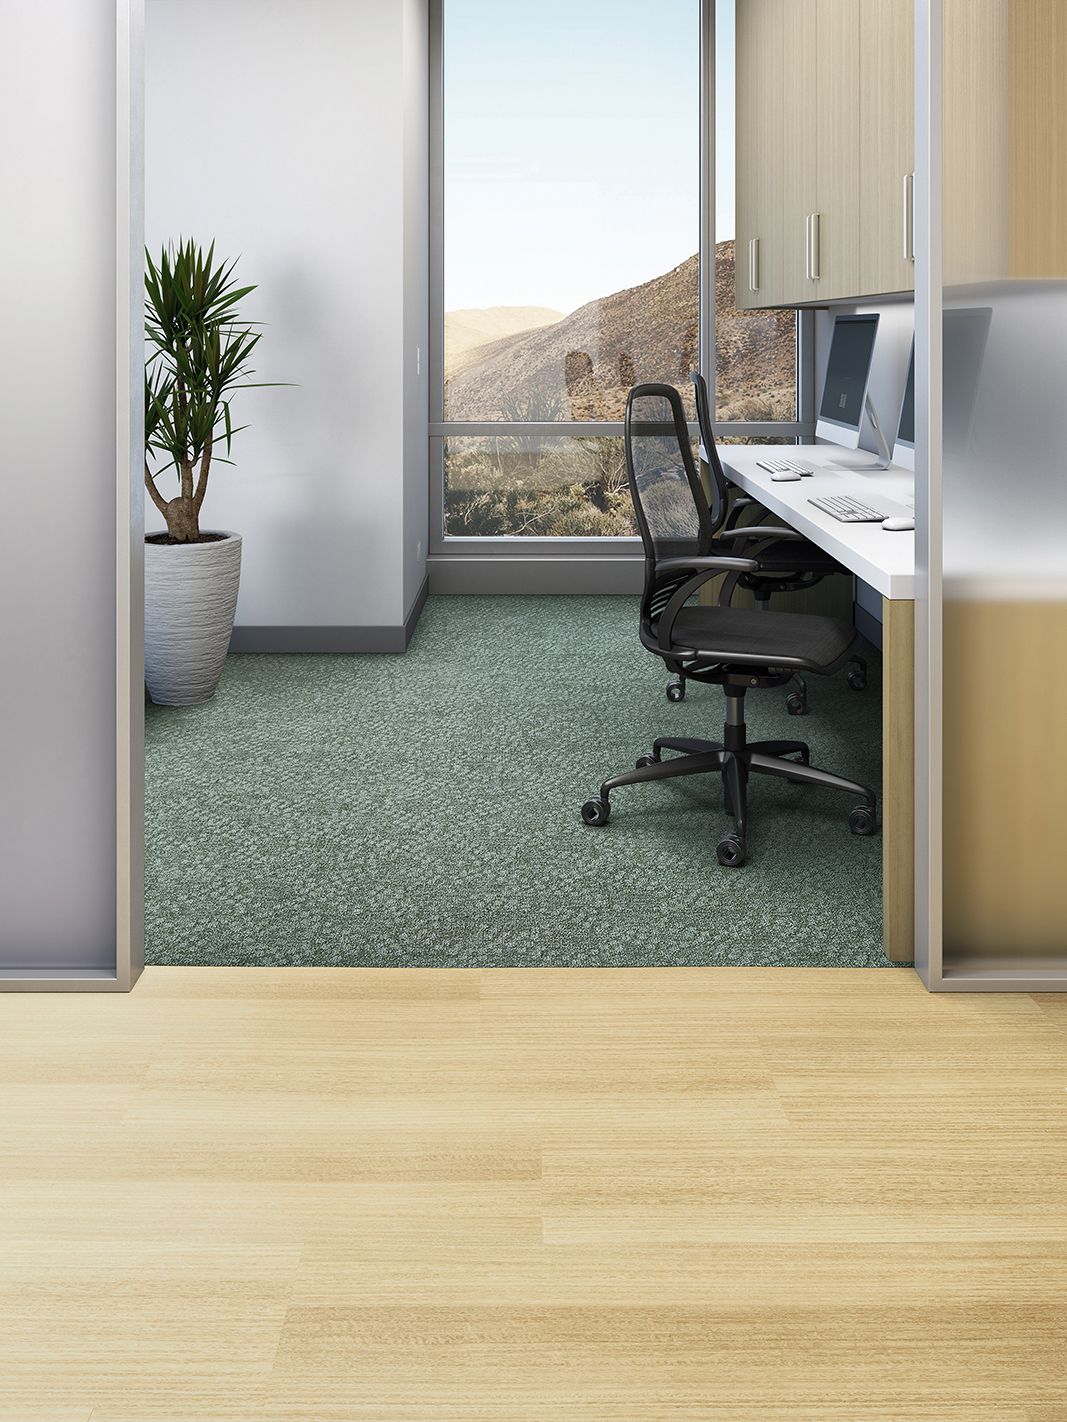 Interface Desert Scapes biophilic flooring carpet and LVT